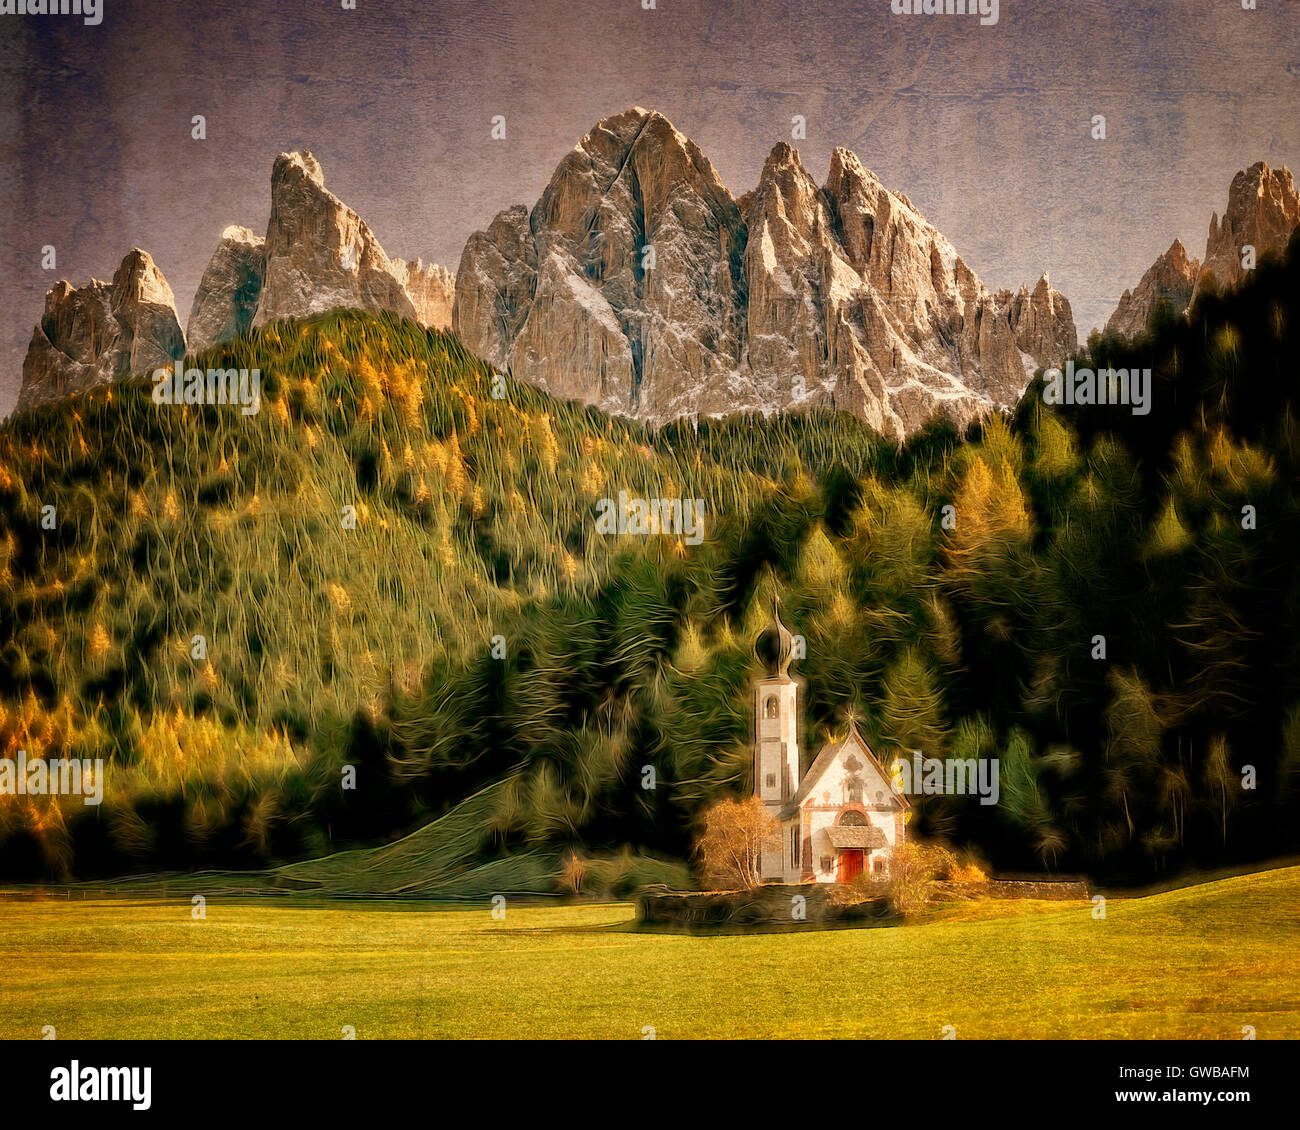 Arte Digital: St. Johann en Ranui en Villnöss tal o Val di Funes, Trentino, Italia Foto de stock